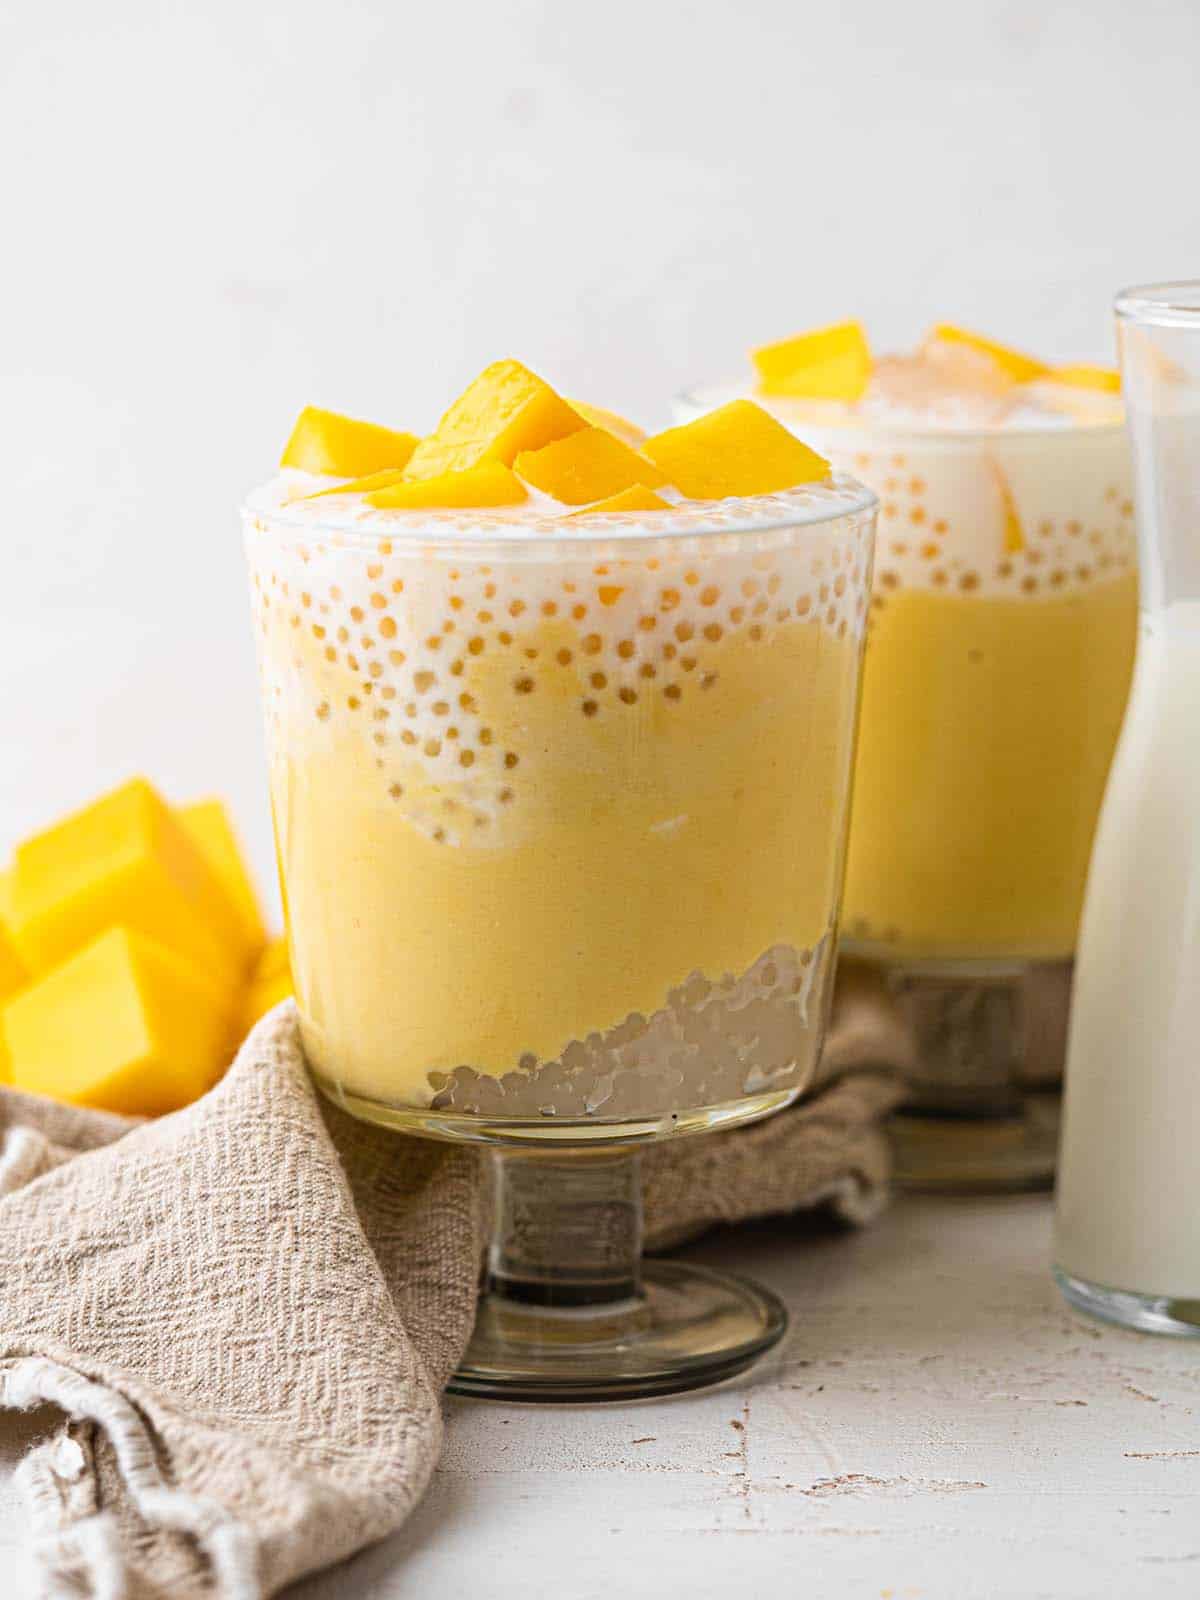 mango sago tapioca pudding with coconut milk and fresh mango